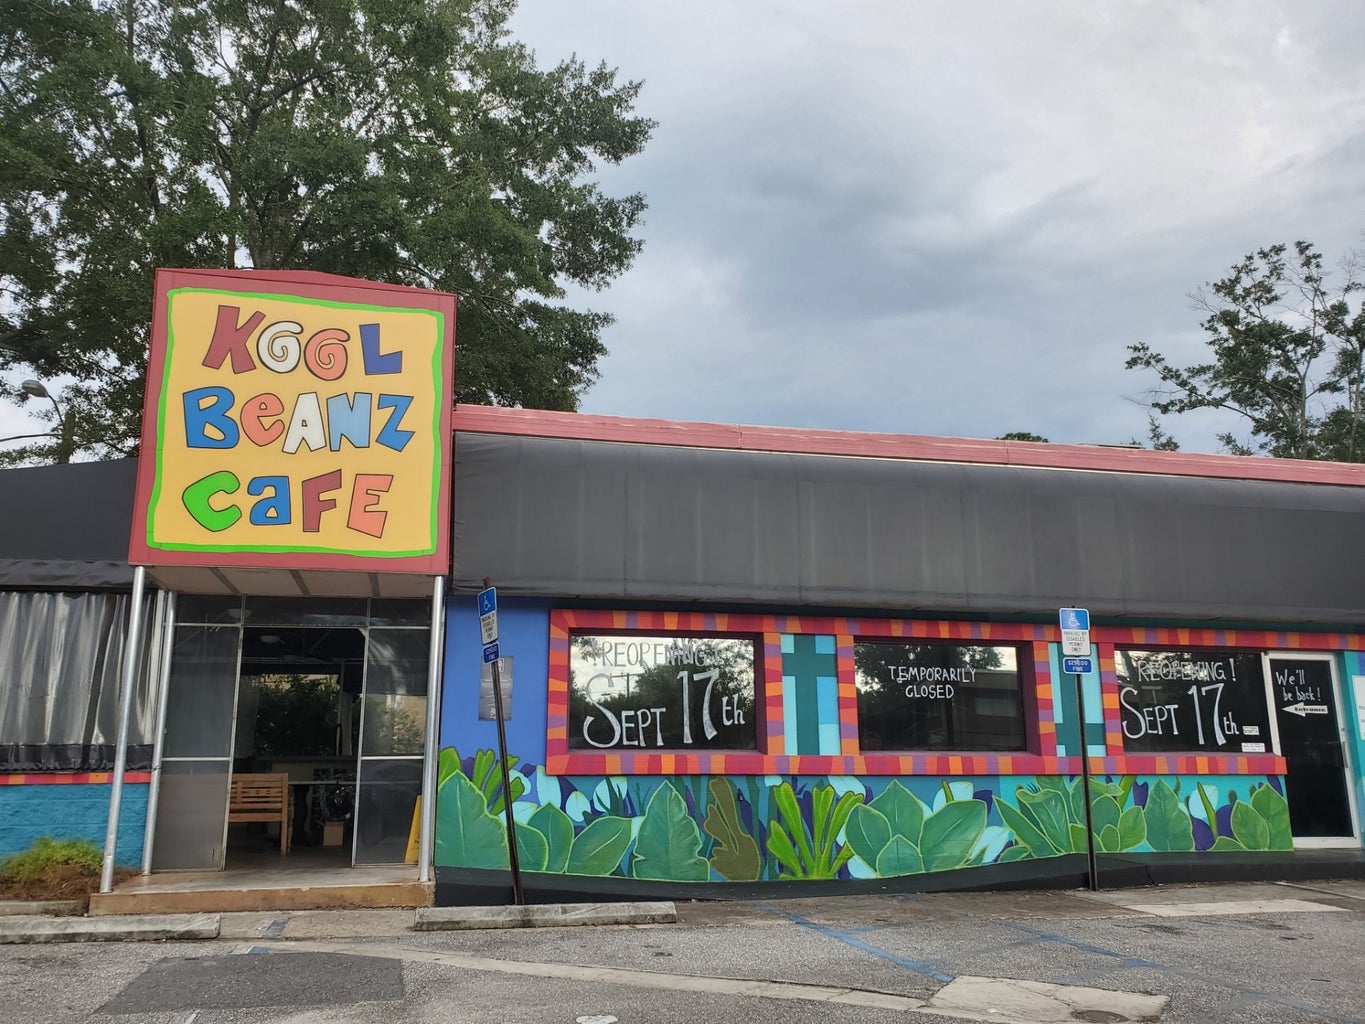 Kool Beanz Cafe exterior and parking lot